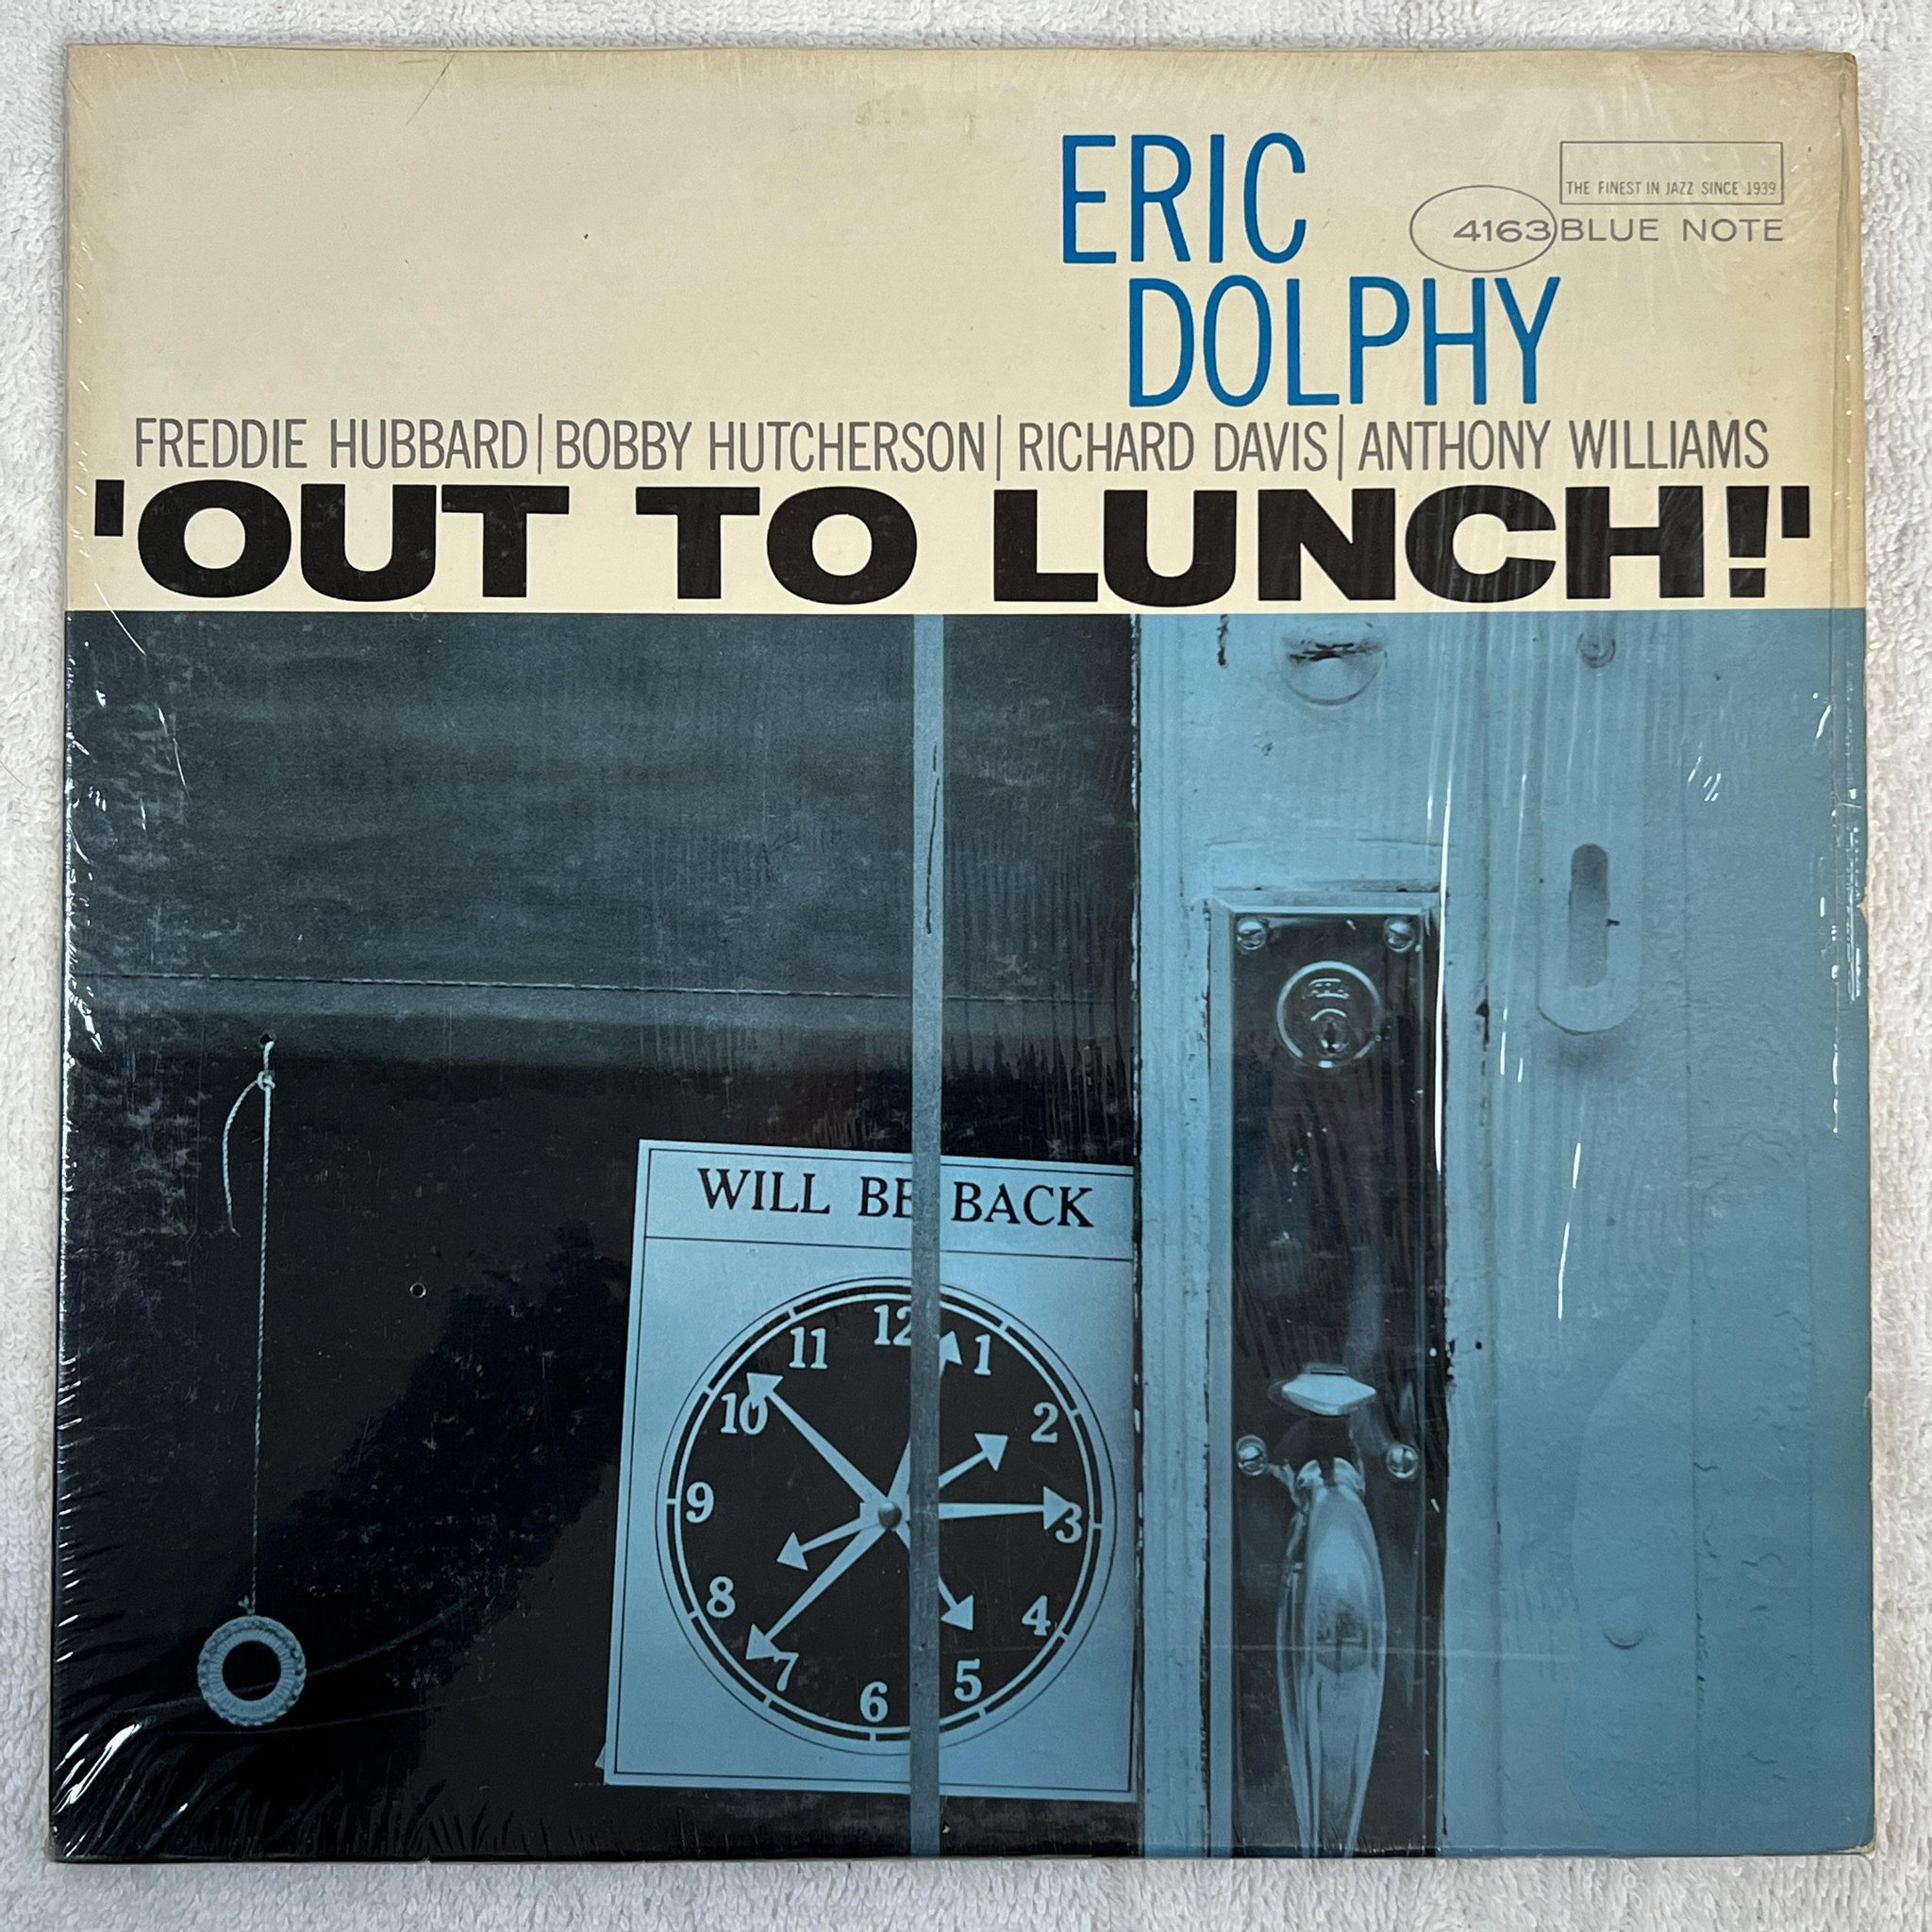 Omslagsbild för skivan ERIC DOLPHY Out To Lunch! LP -66 US BLUE NOTE BLP 4163 *** RARE JAZZ ***